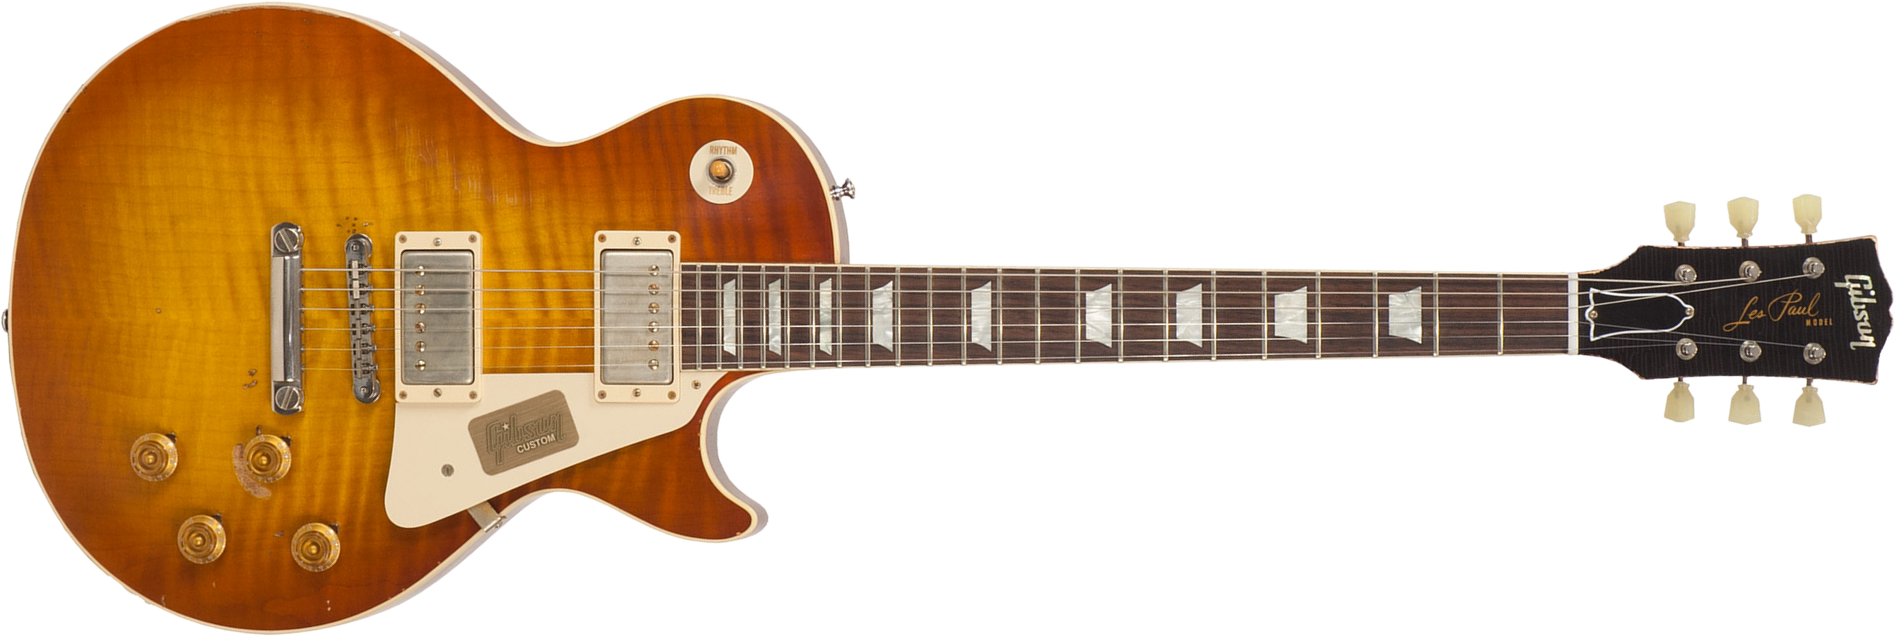 Gibson Custom Shop M2m Les Paul Standard 1959 2h Ht Rw #r961618 - Aged Sunrise Teaburst - Single cut electric guitar - Main picture